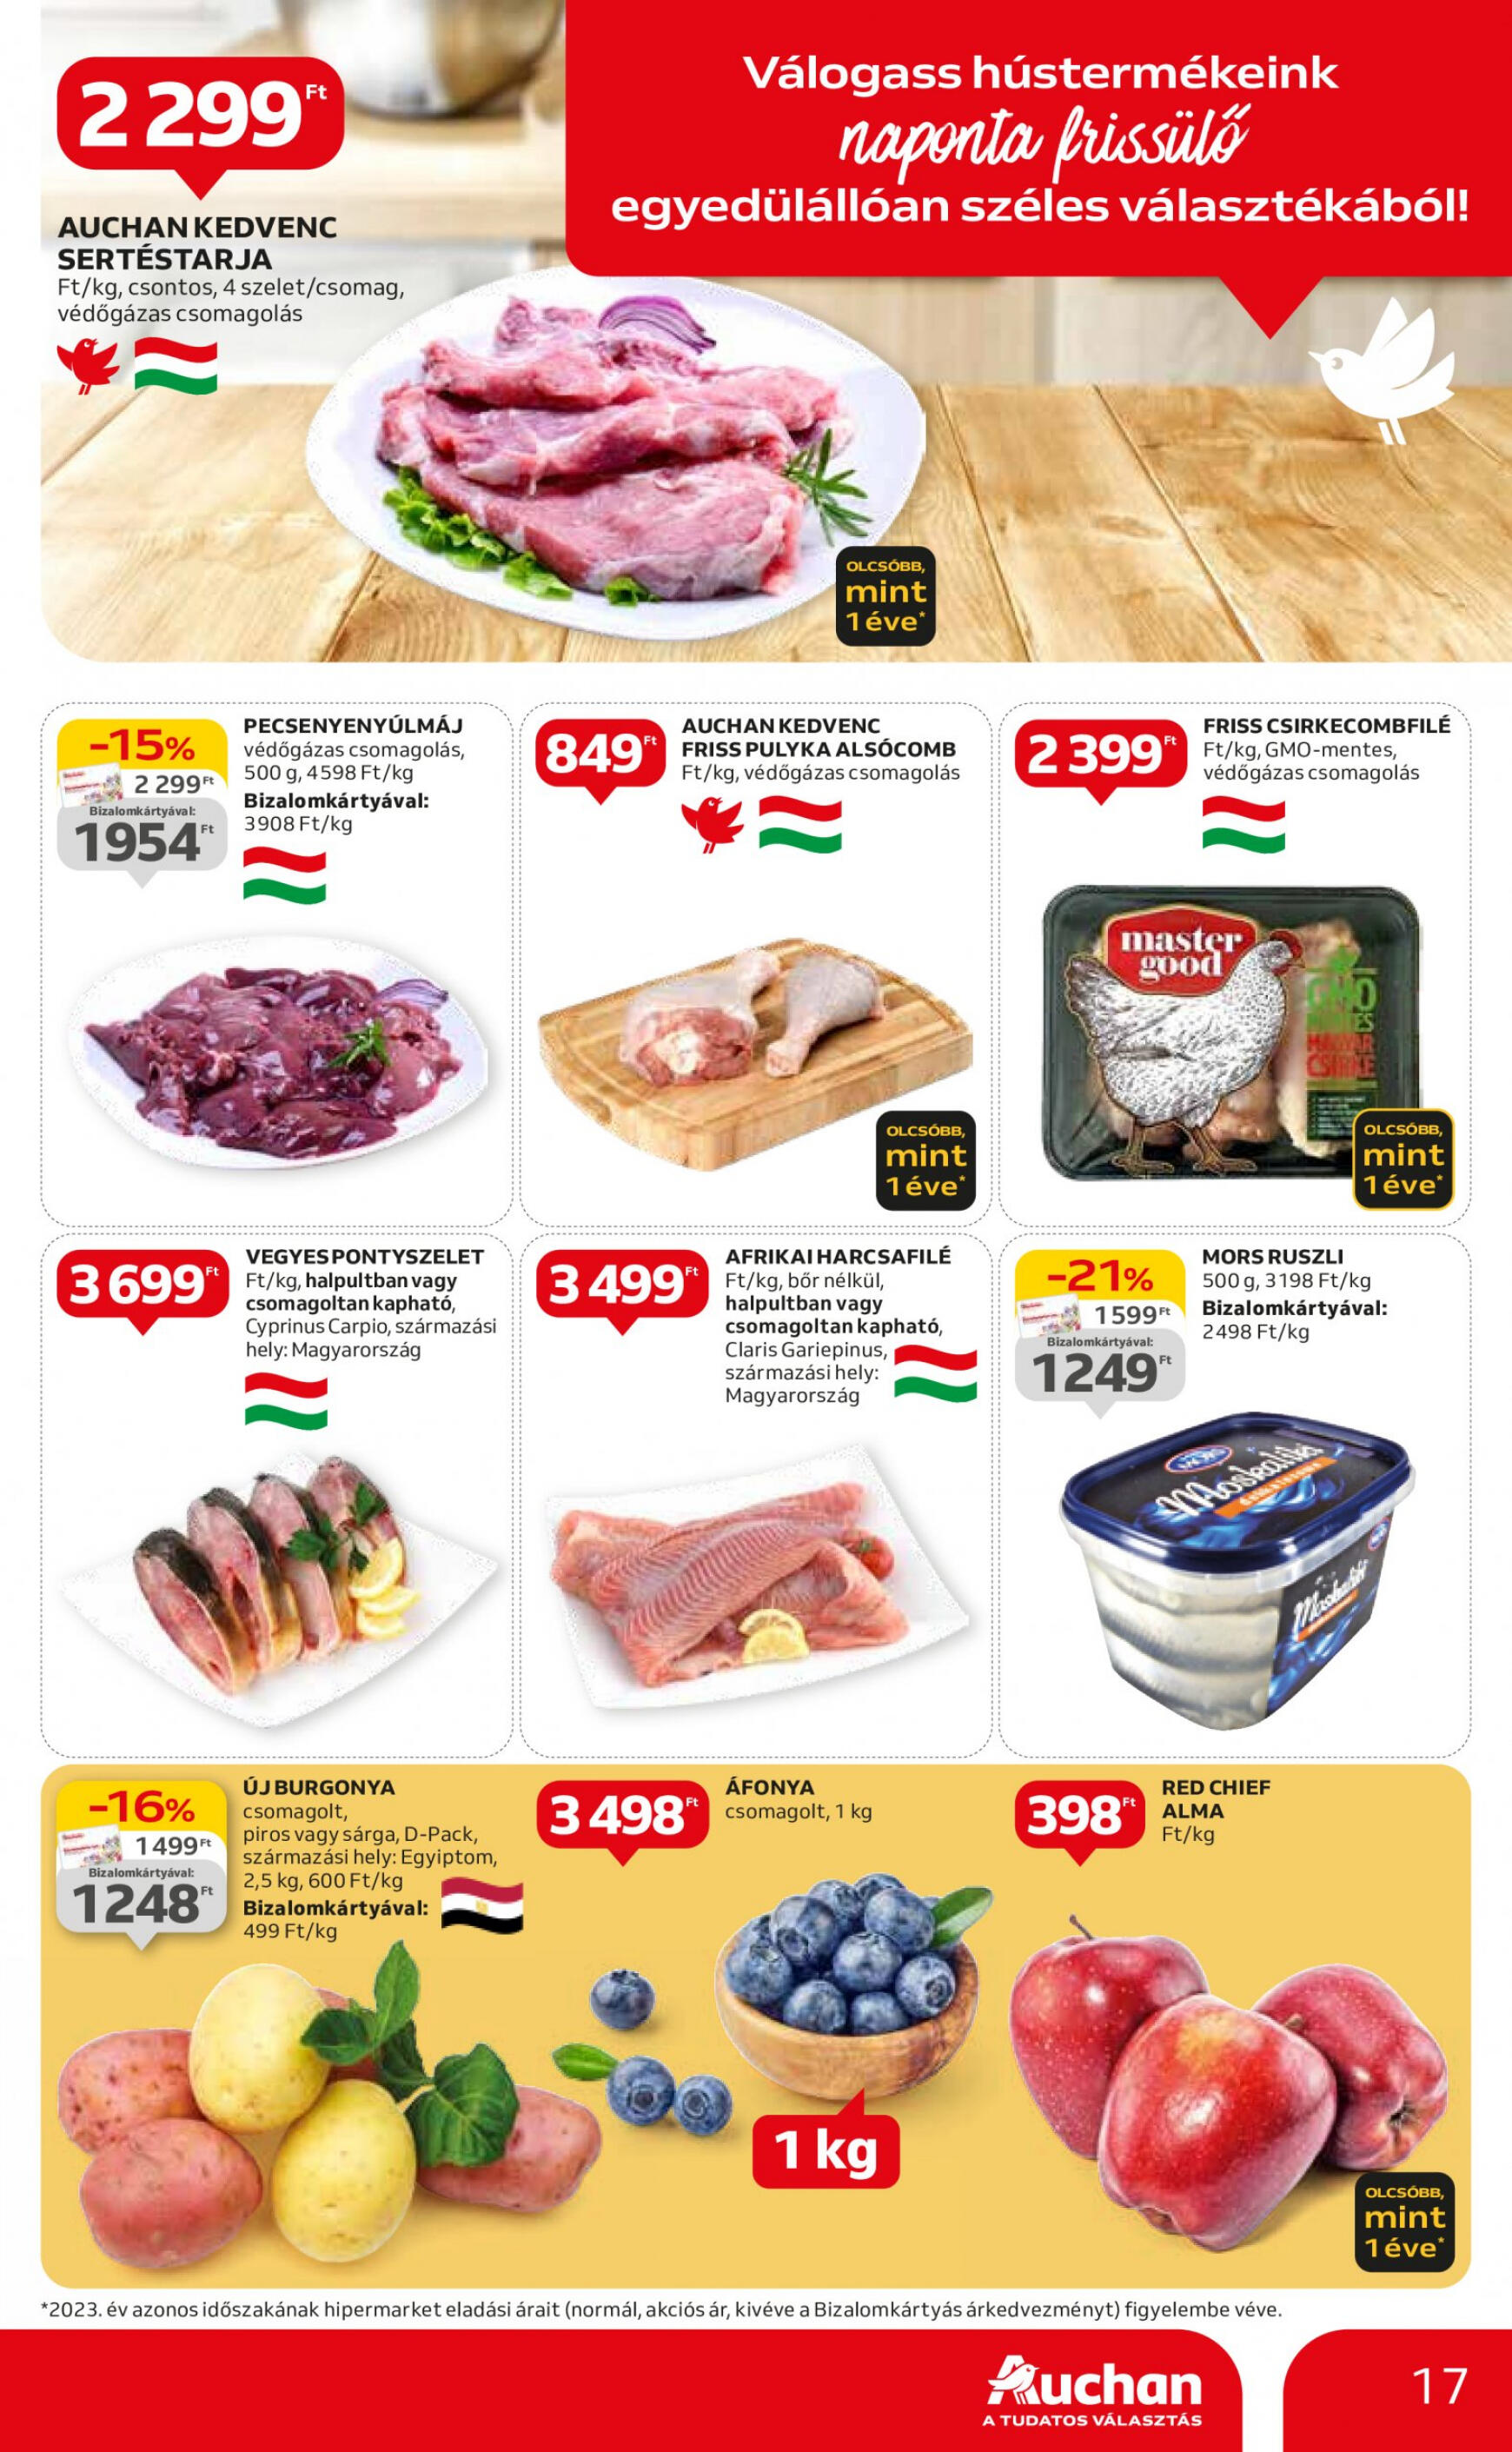 auchan - Aktuális újság Auchan 04.25. - 04.30. - page: 17